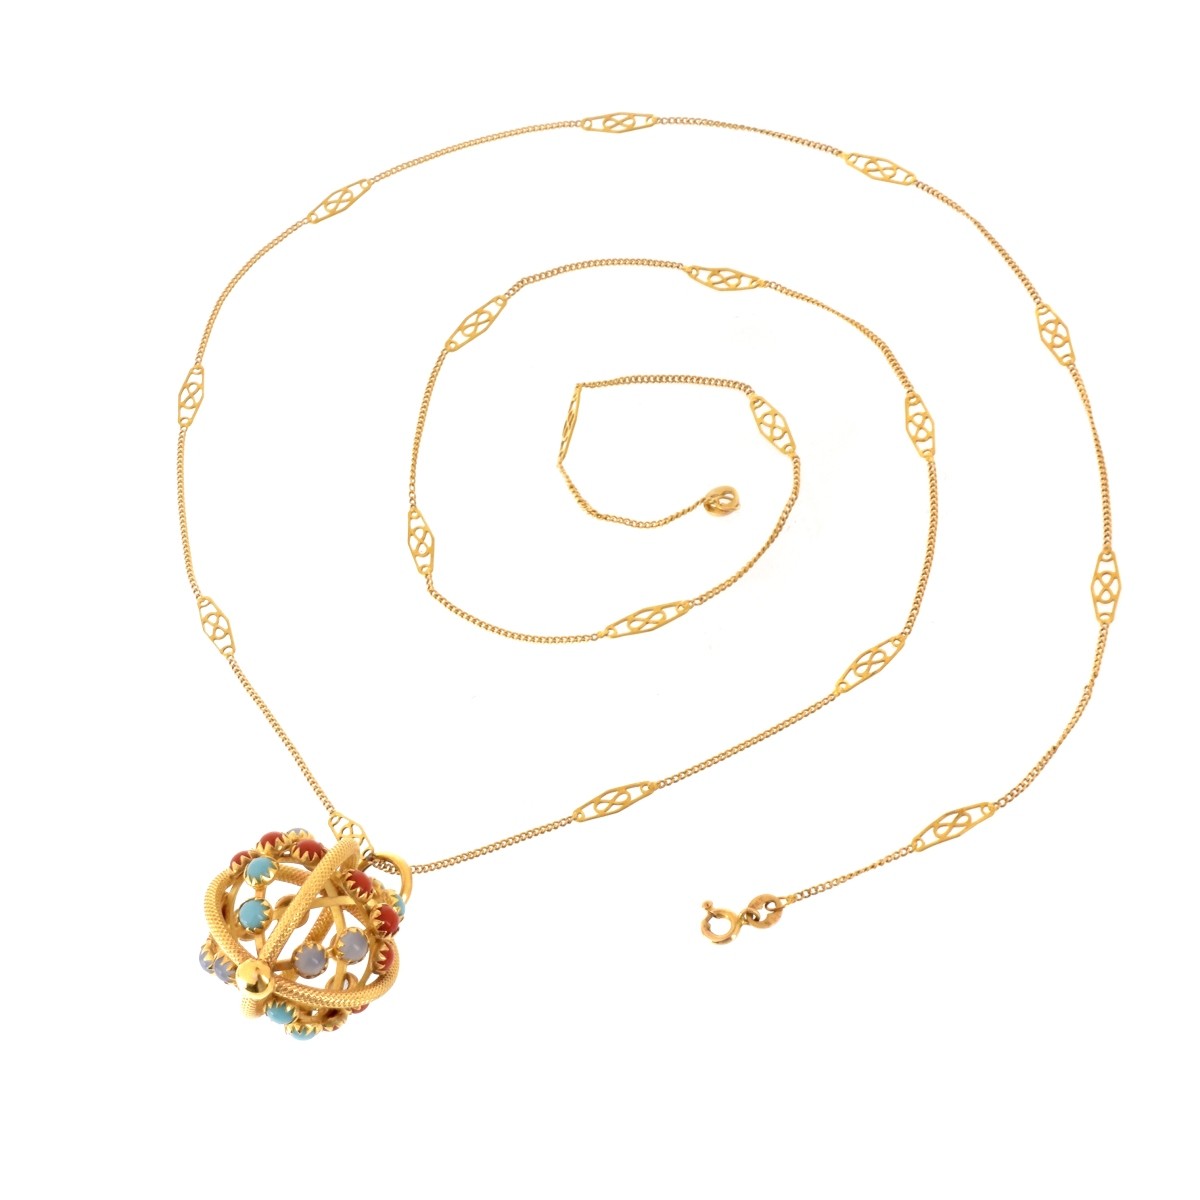 Gemstone and 18K Pendant Necklace